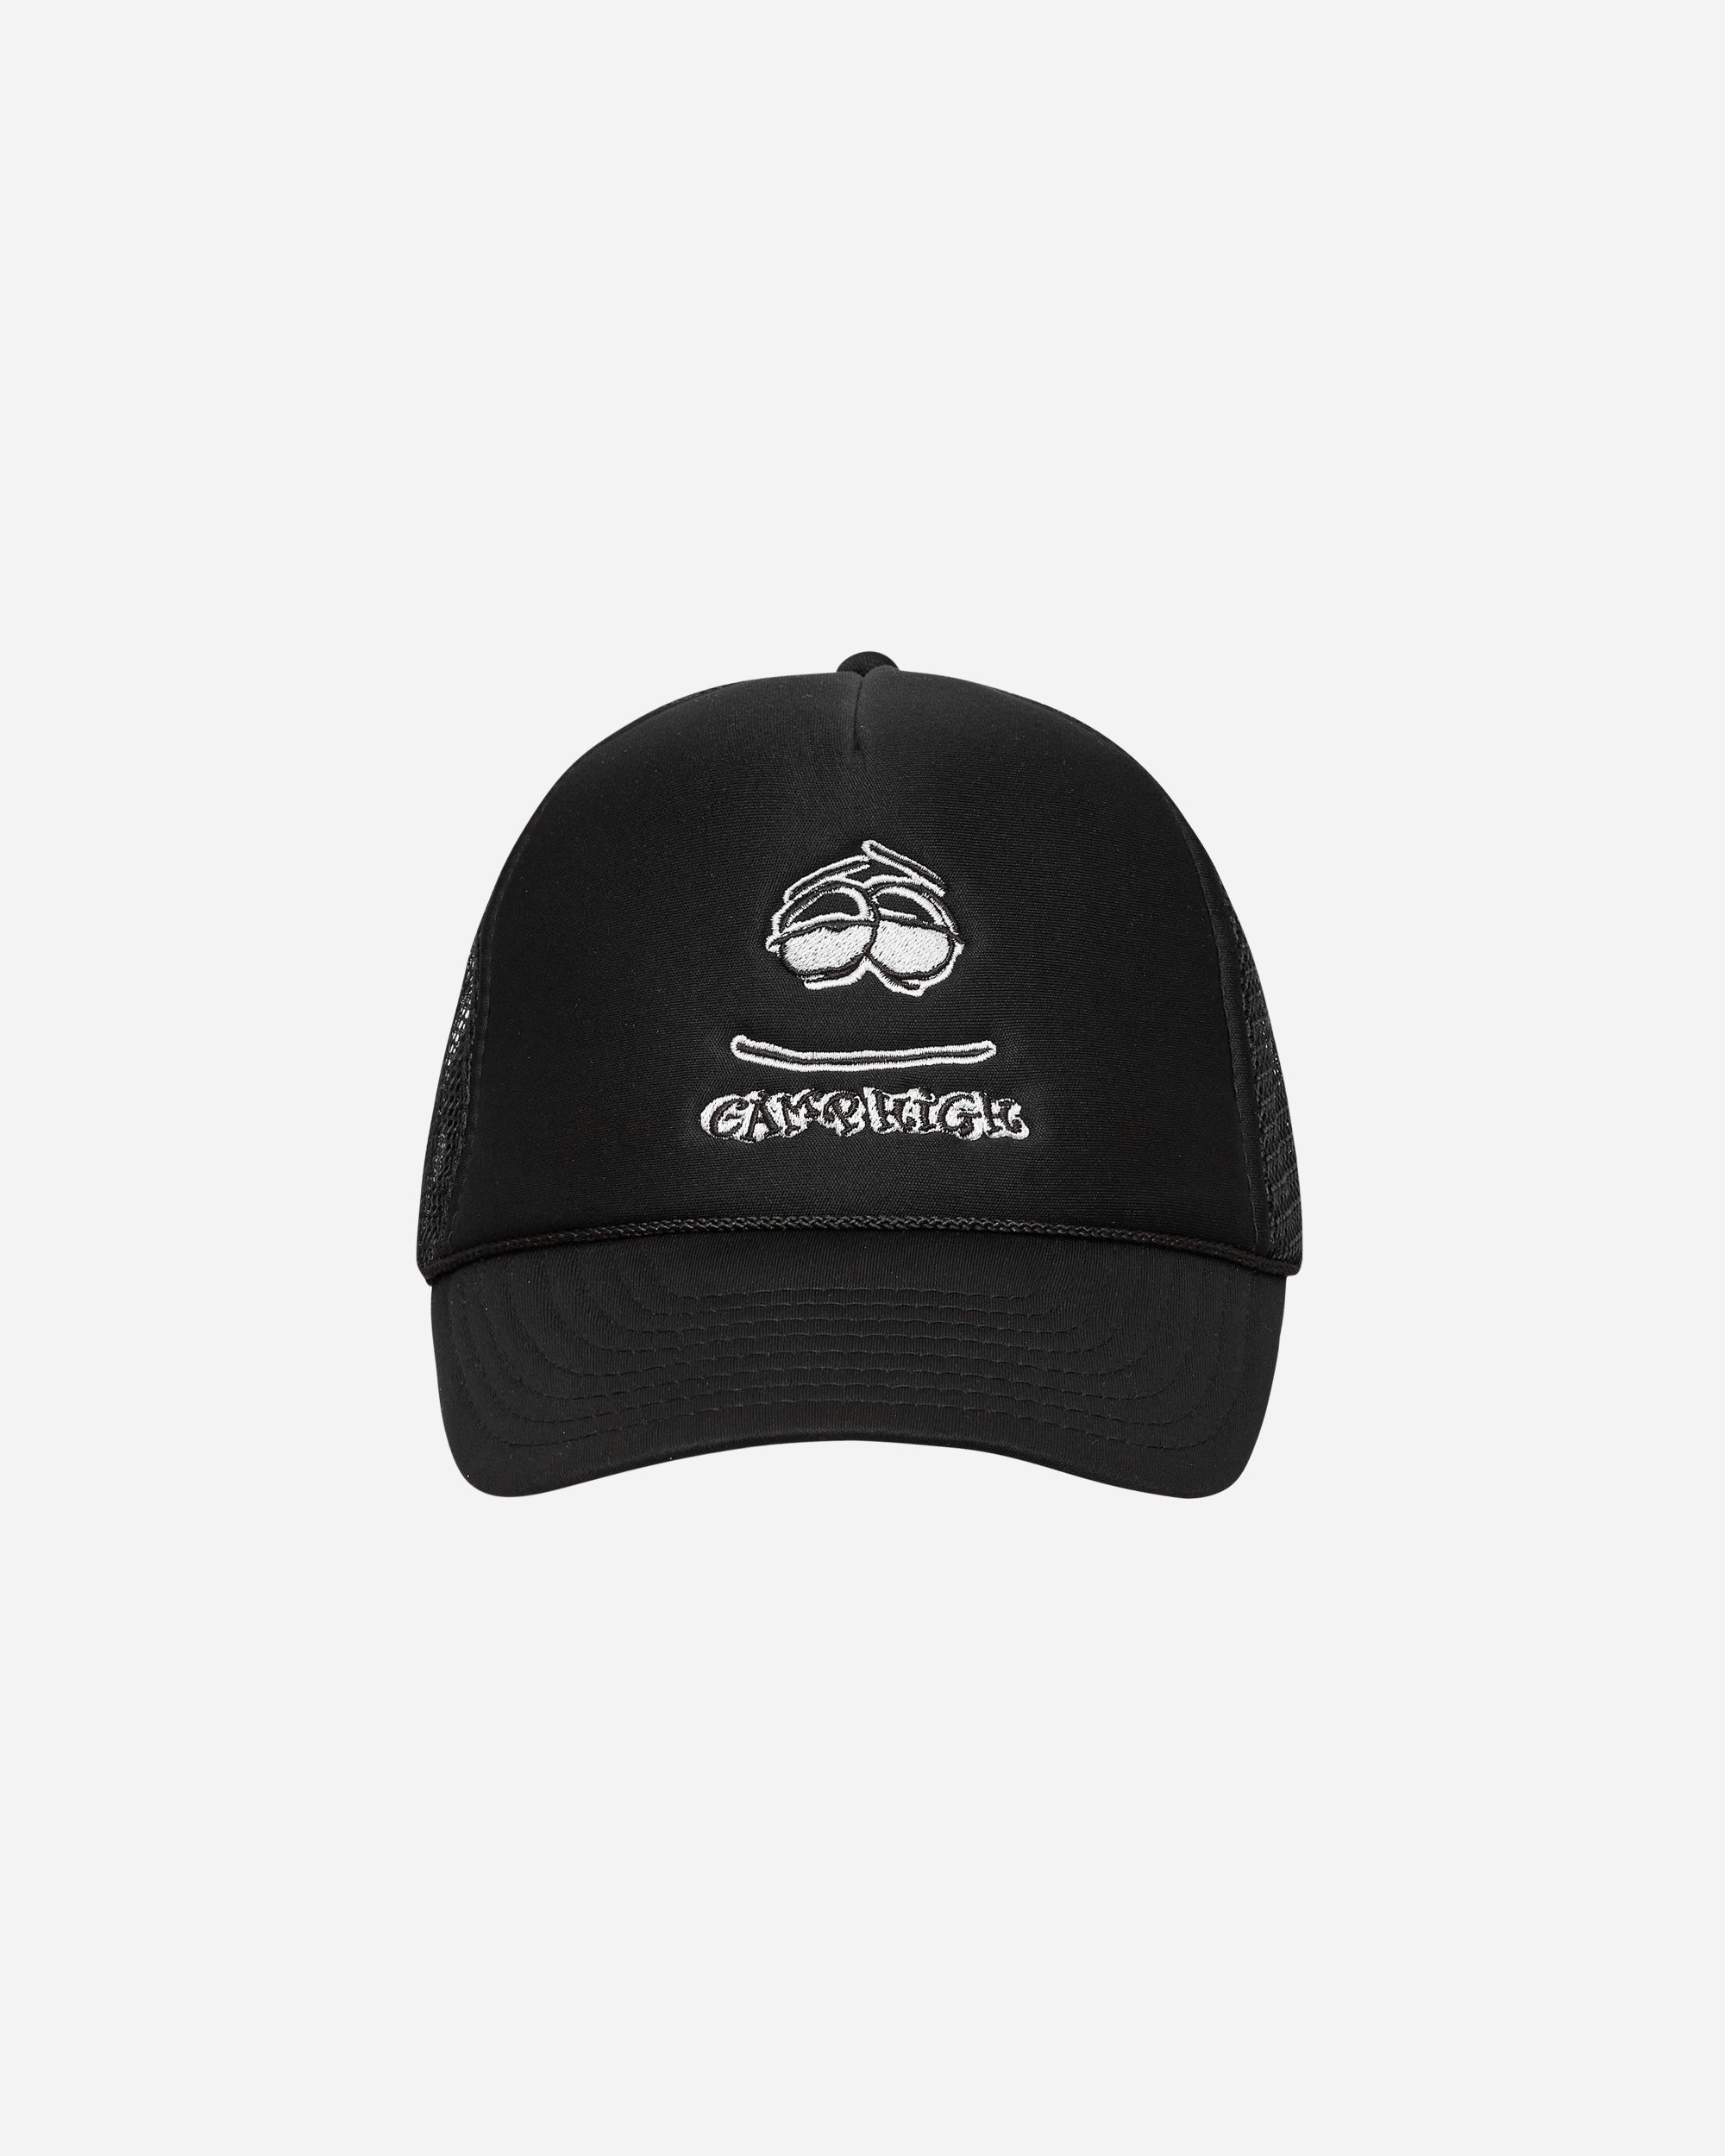 Camp High High Eyes Lid Black Hats Caps CHEYESCAP BLACK